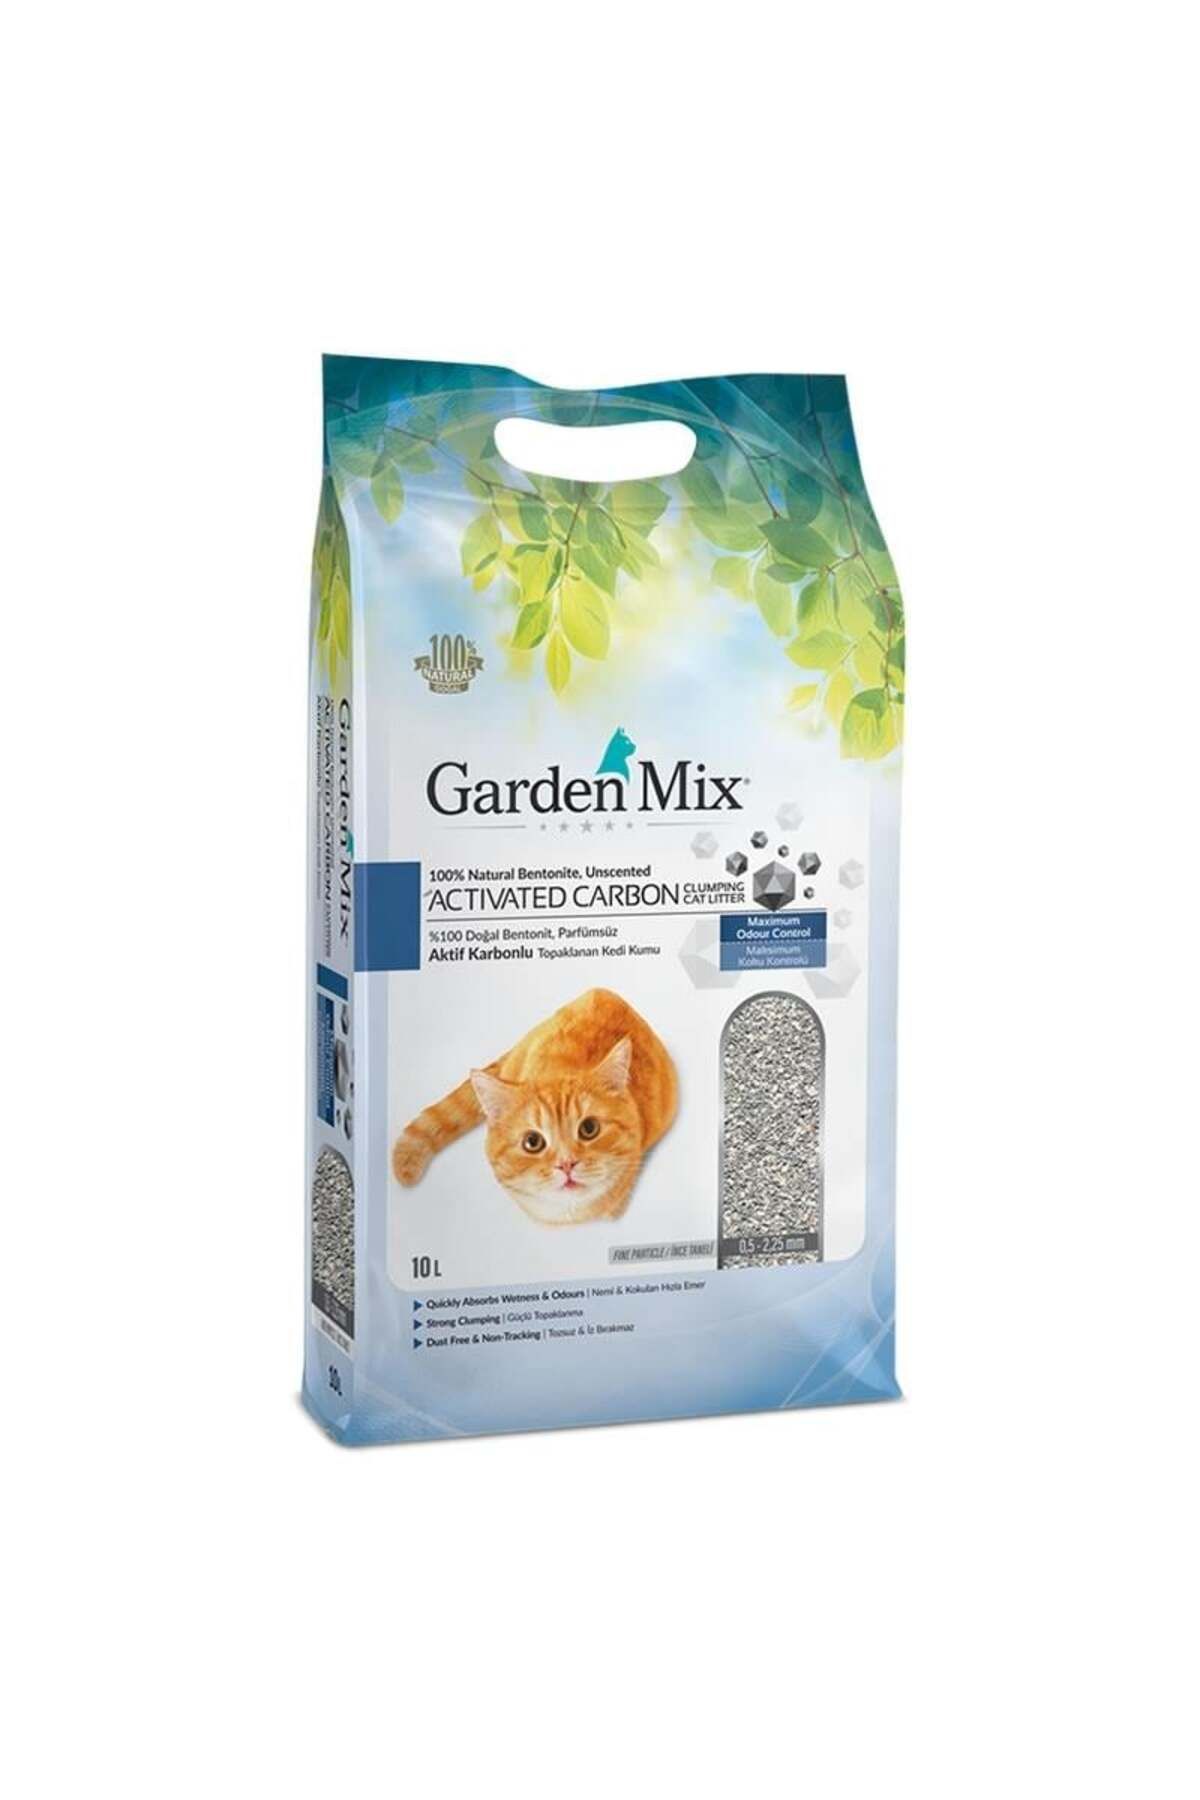 Gard Gardenmix Bentonit Aktif Karbonlu 10 Lt